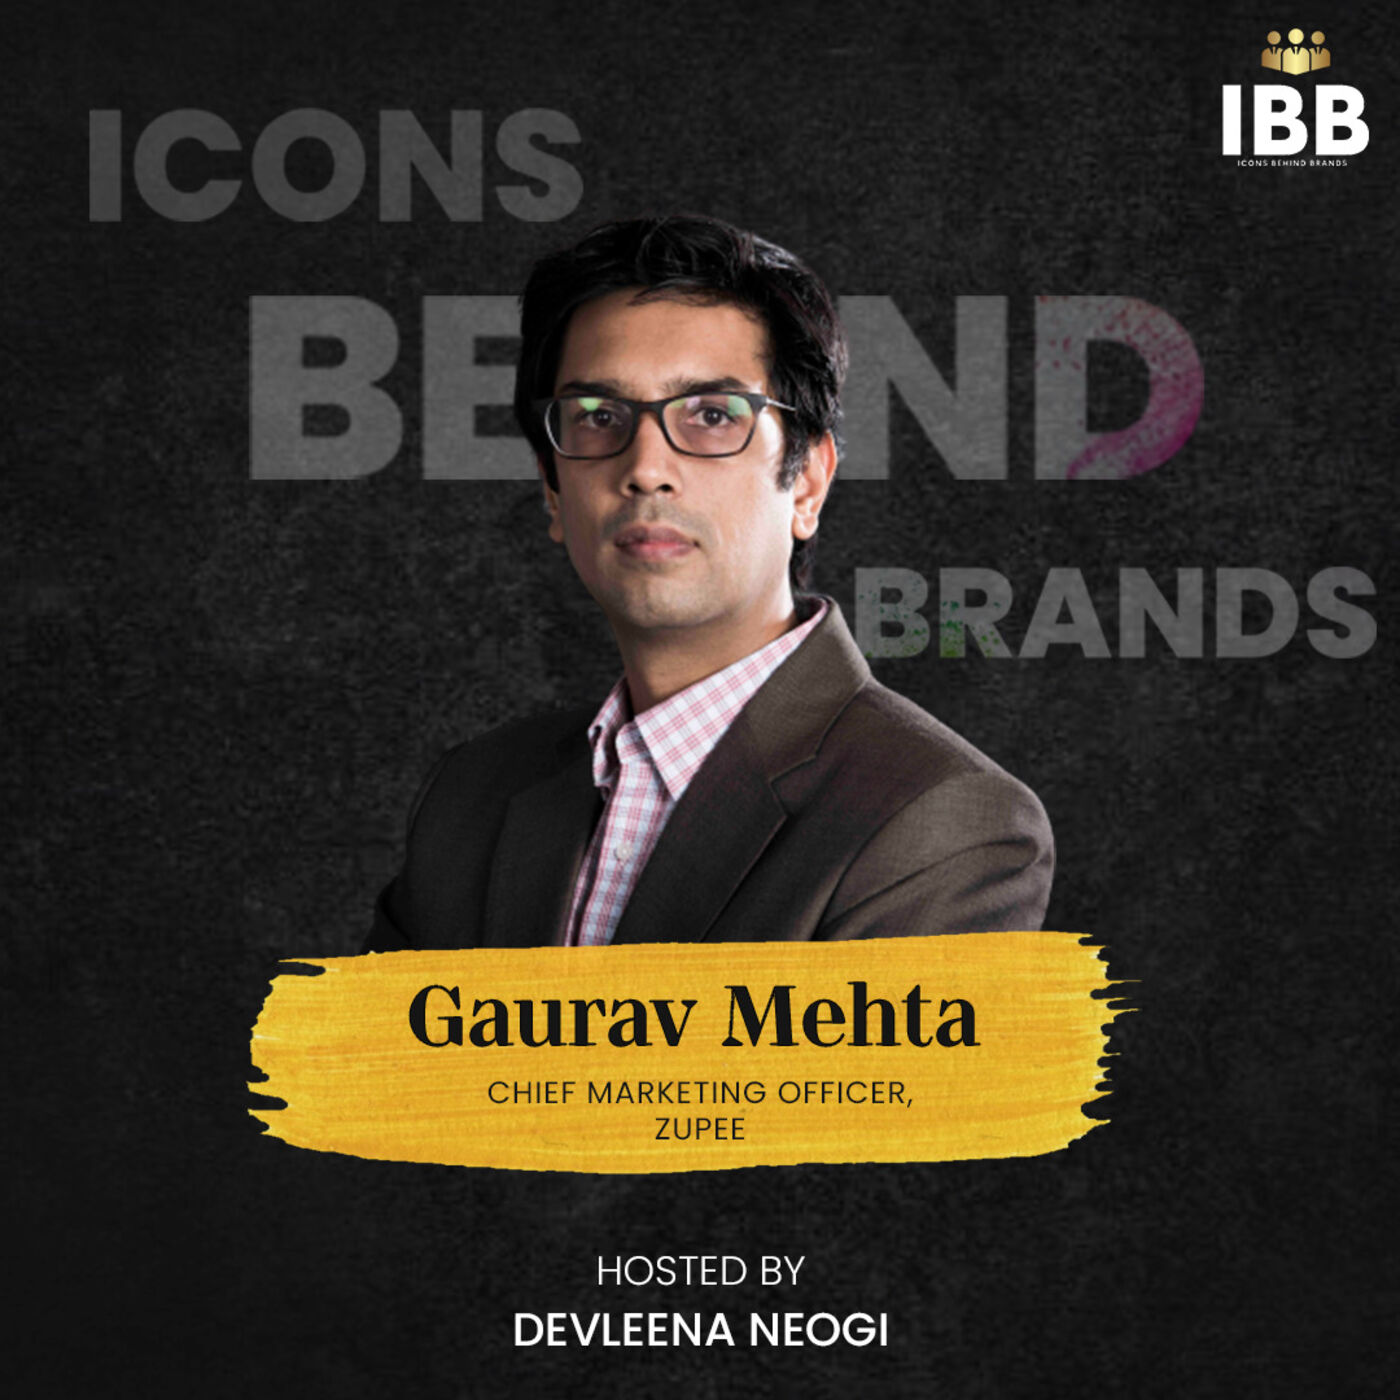 Insightful interview with a marketing expert from Auto Tech companies | Gaurav Mehta | Zupee | 40 under 40 | IBB